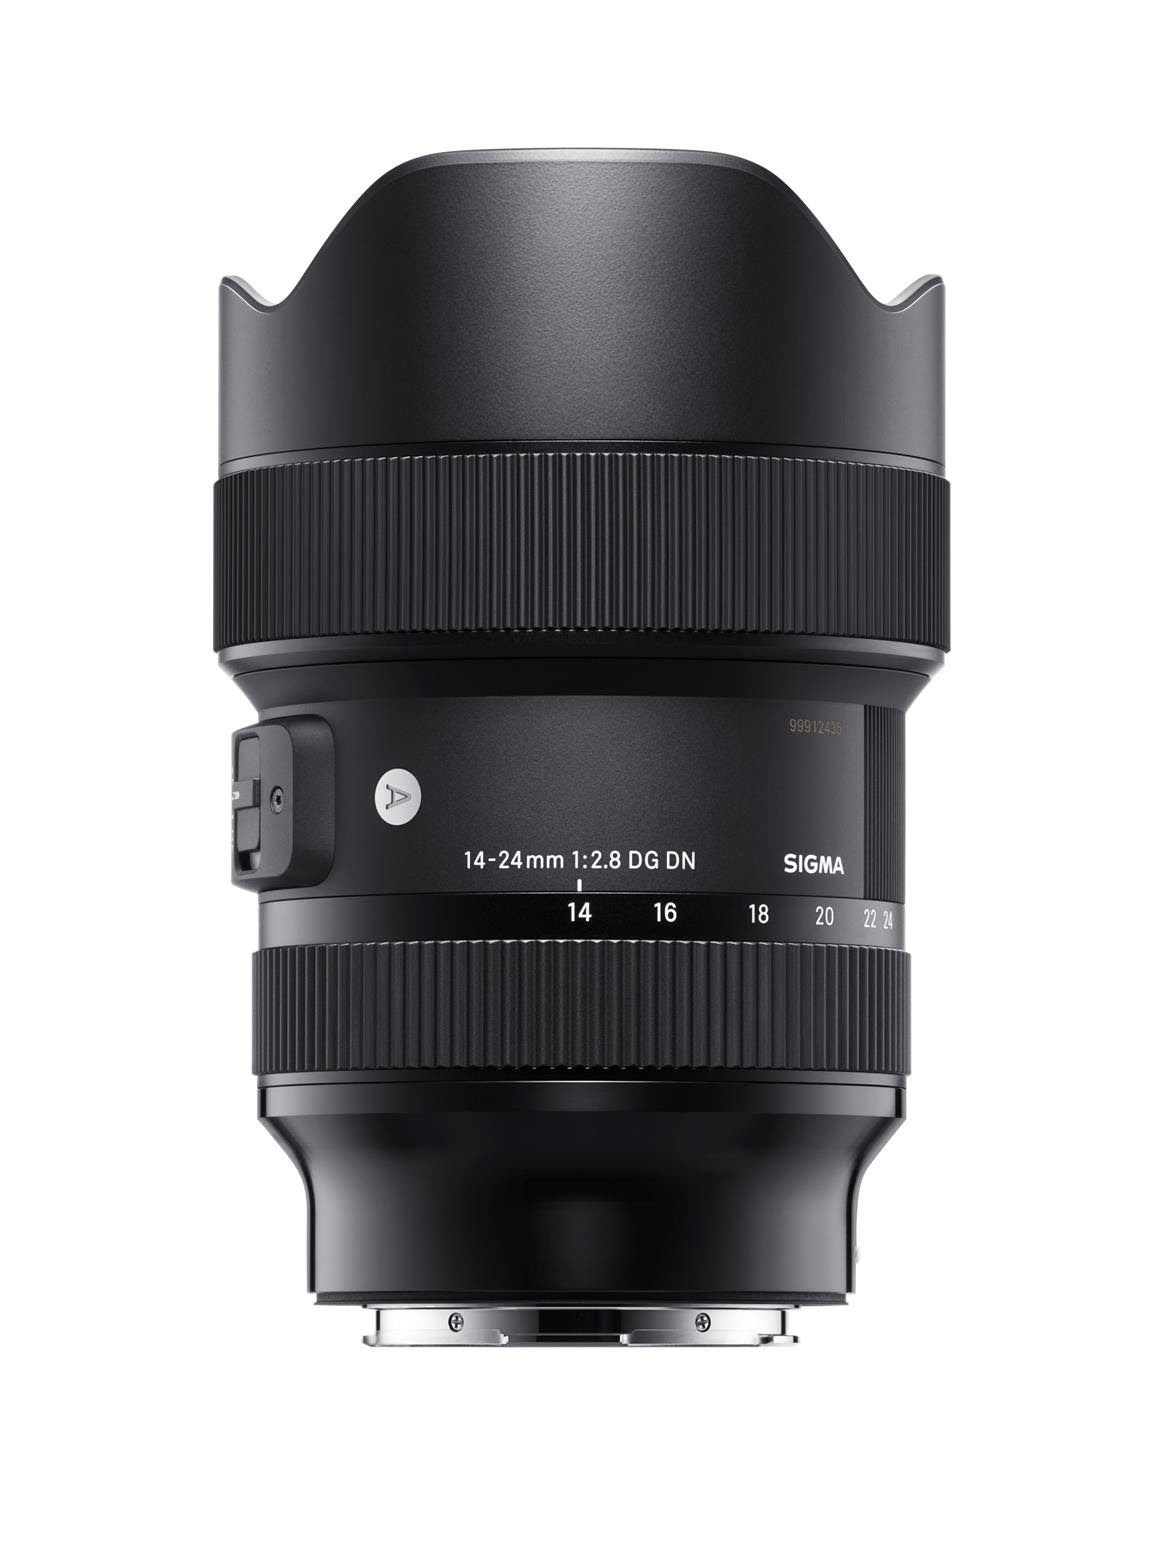 Sigma Imaging USA 2020 Lineup to Highlight fp Digital Camera, New Full-Frame Mirrorless Zoom Lenses